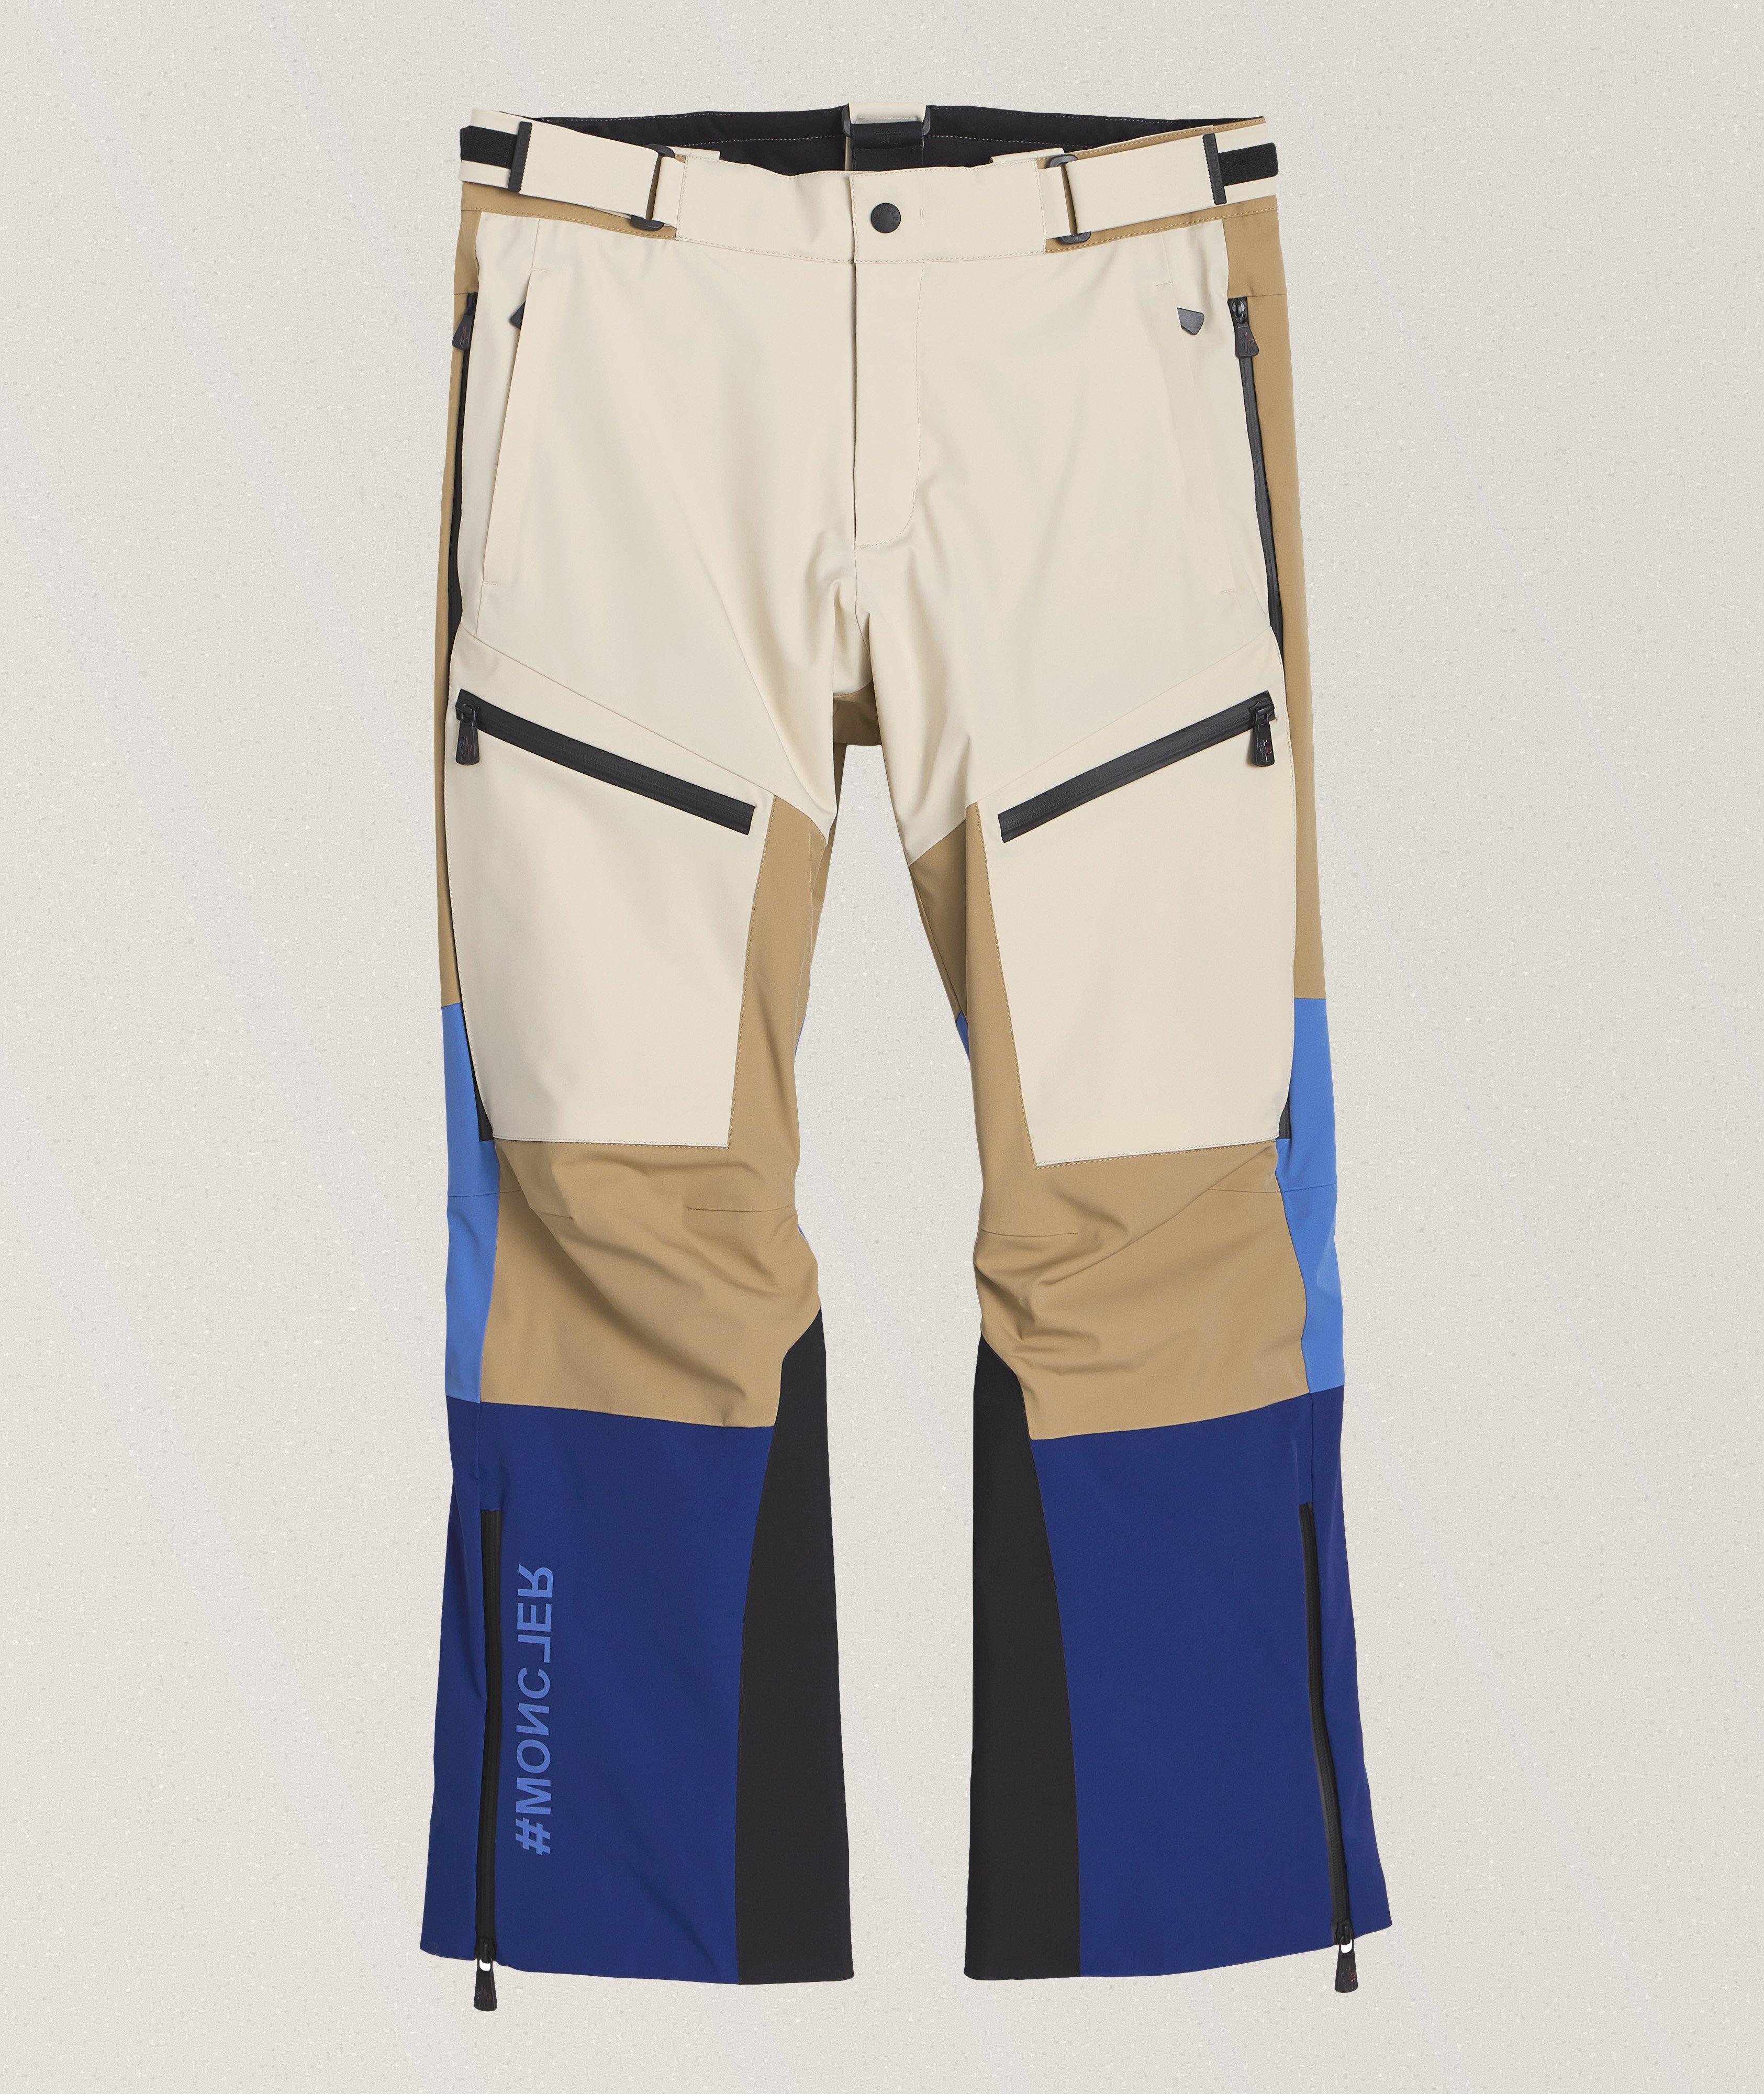 Moncler Grenoble PrimaLoft-Insulated Ski Pants, Pants